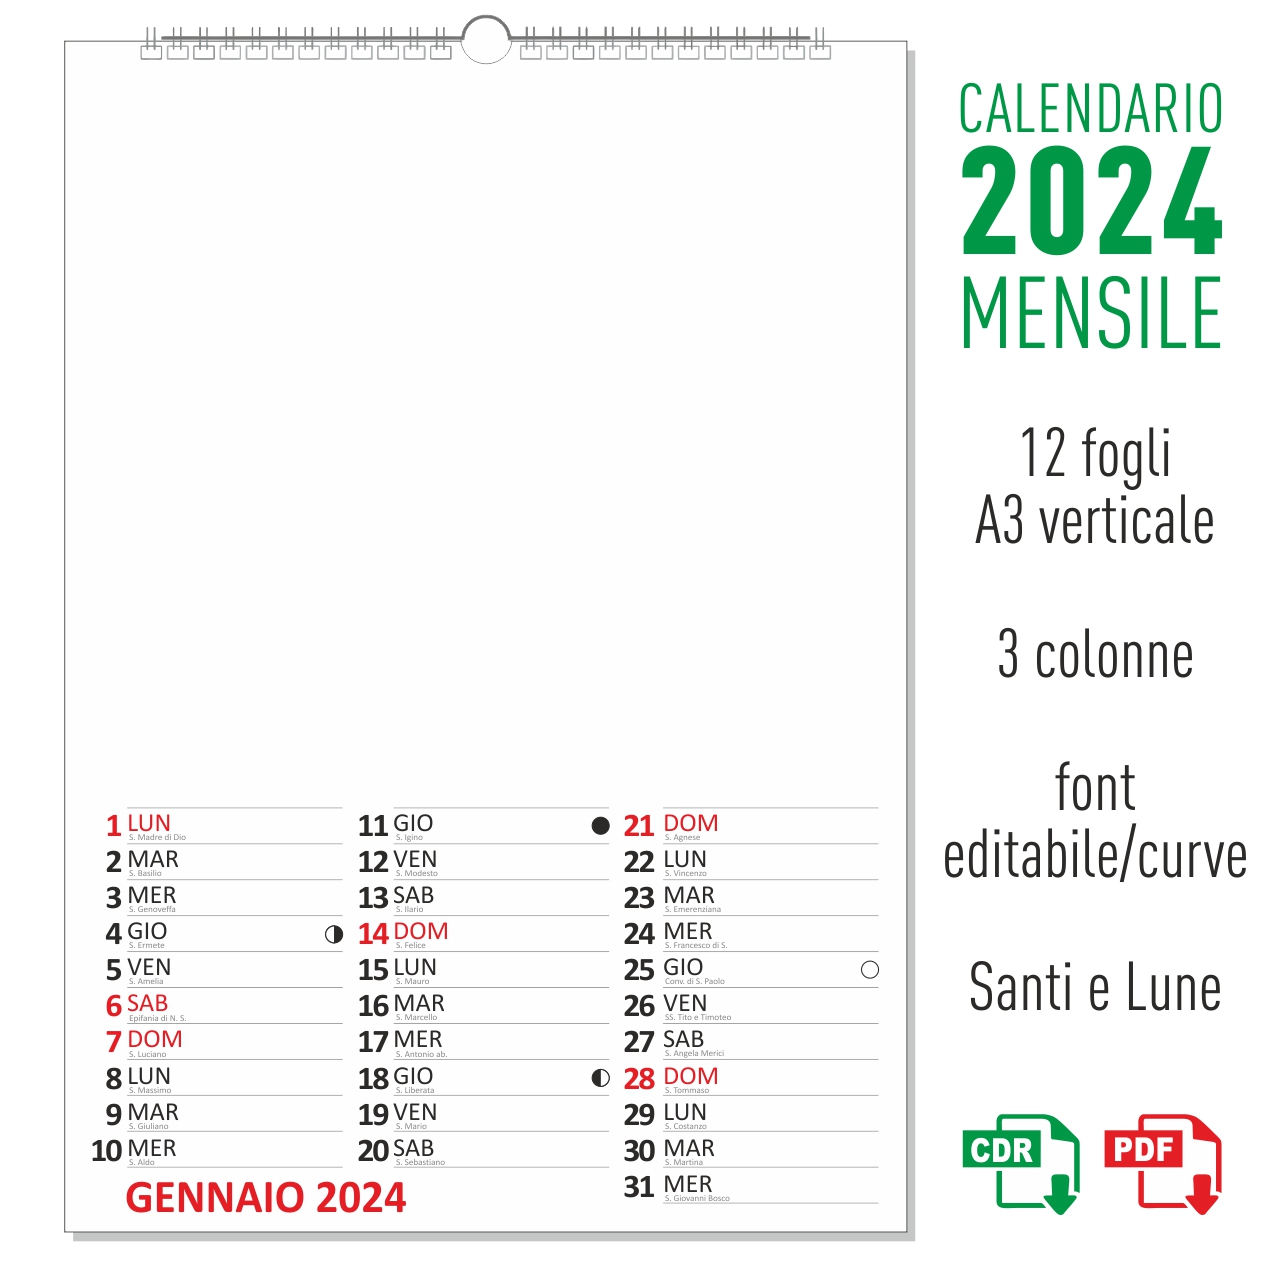 Peppe Cau – Calendario 2024 editabile